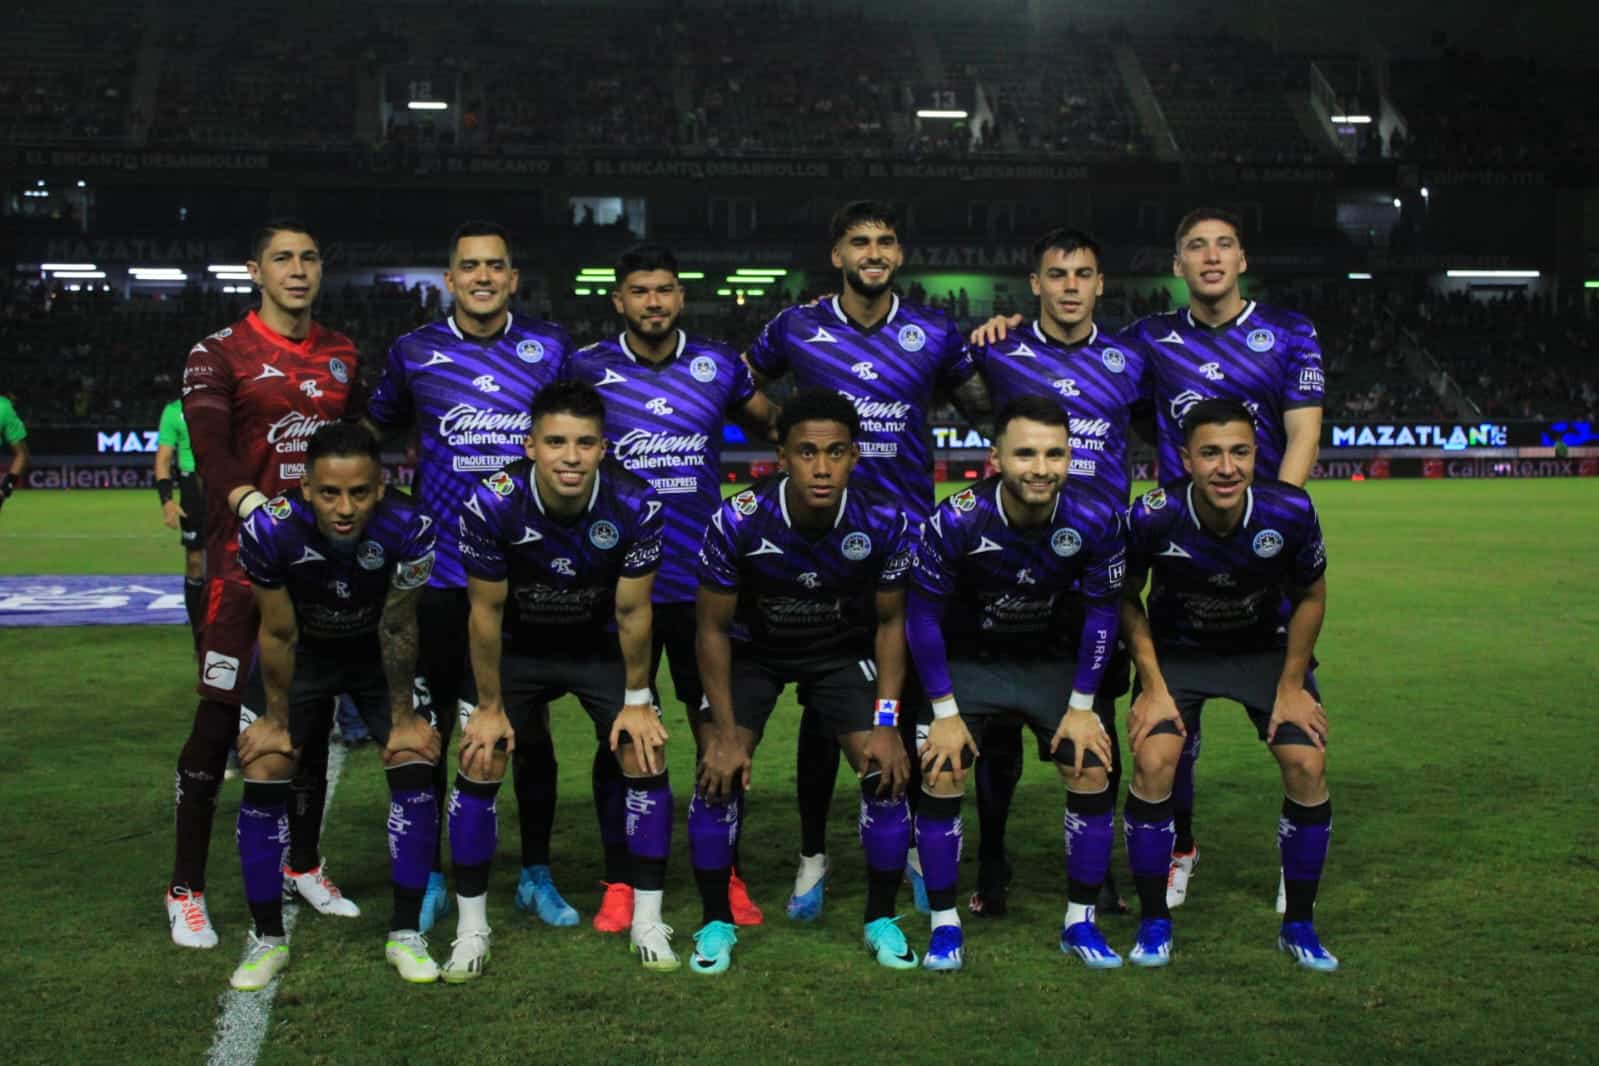 Equipo de futbol del club Mazatlán FC